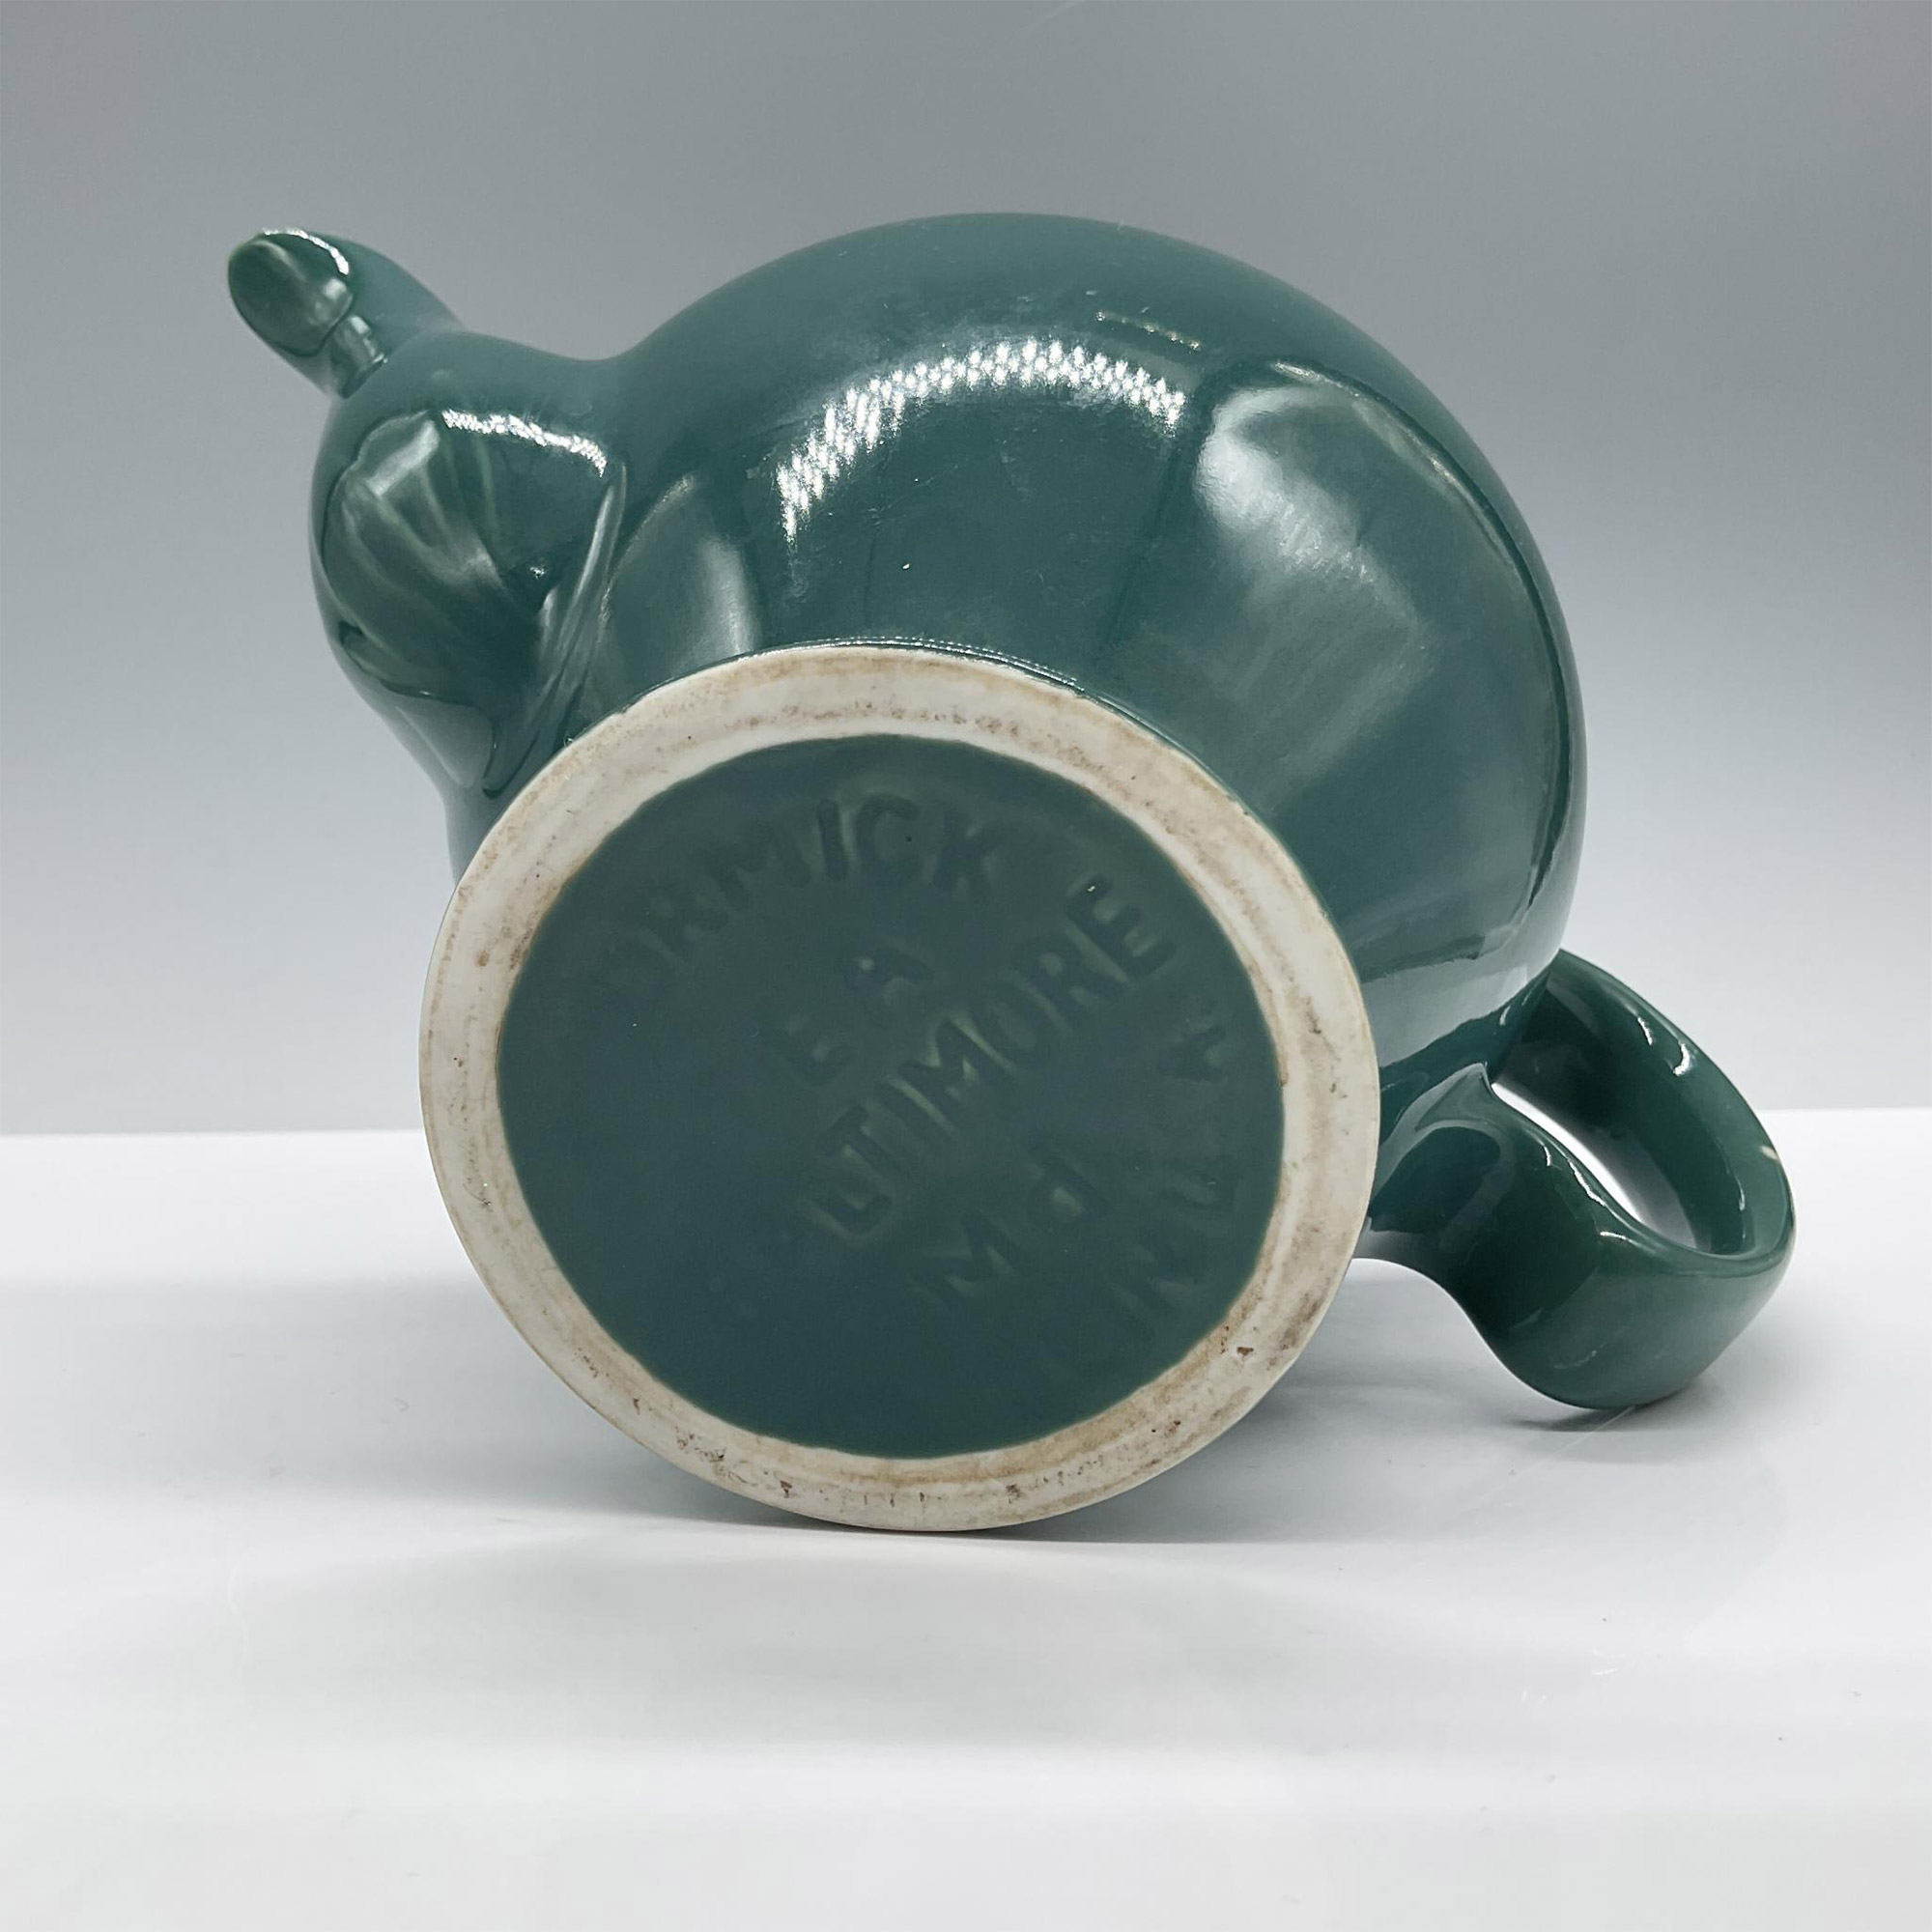 McCormick Porcelain Lidded Tea Pot with Infuser, Baltimore - Image 3 of 3